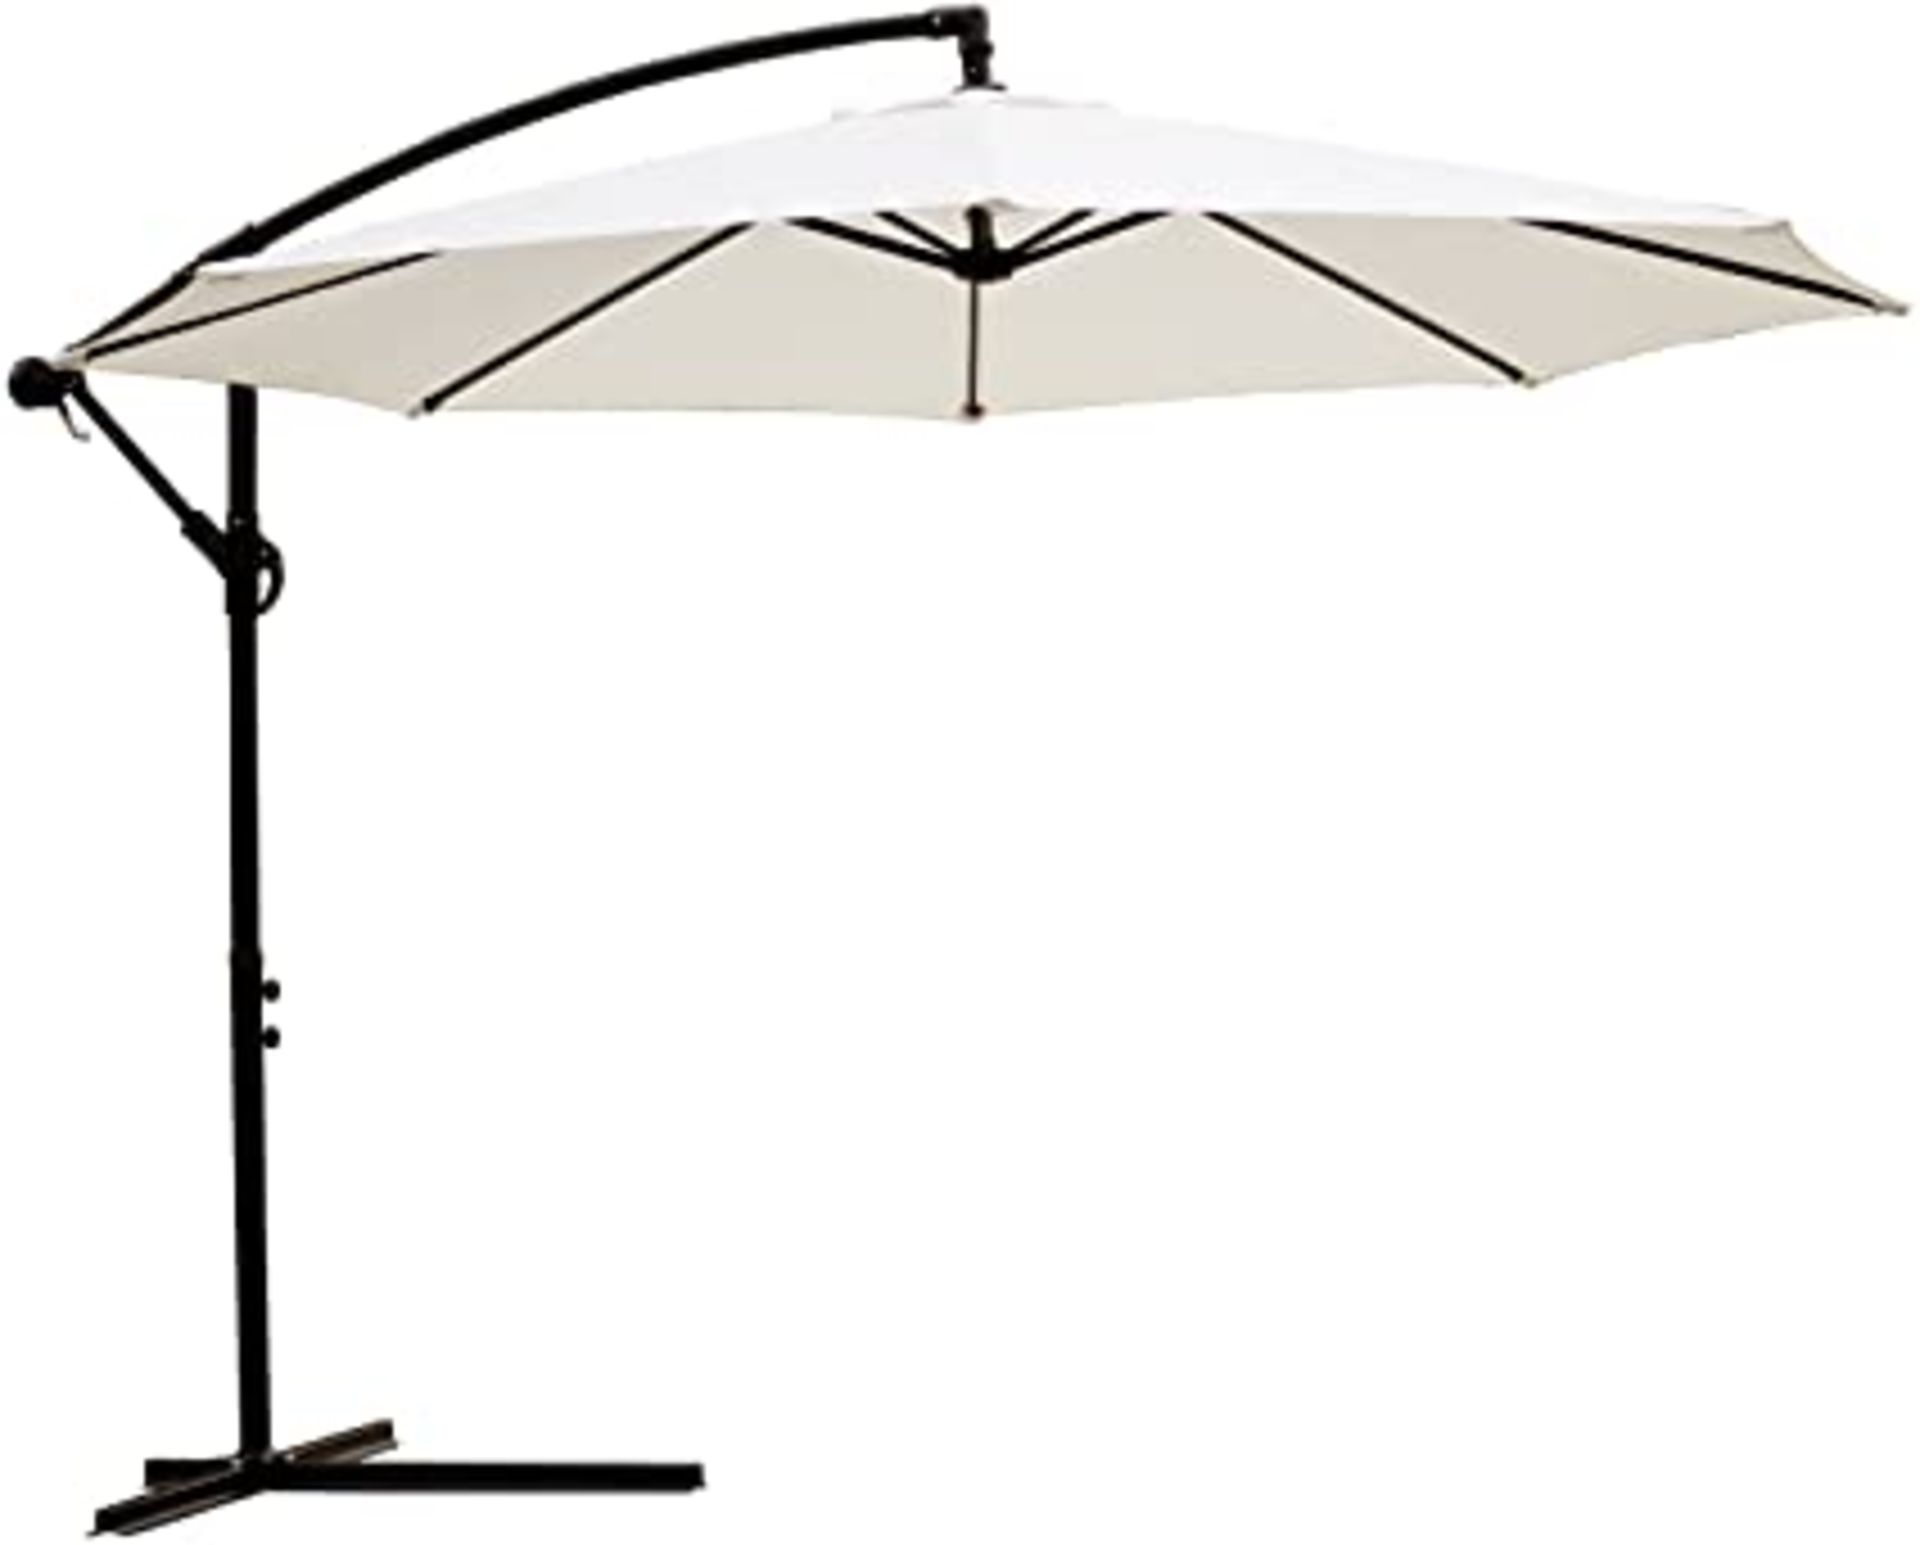 * 5x Ivory Banana Umbrella with Parasol Base. Parasol 3m Diameter. Steel Frame. 180g Polyester.